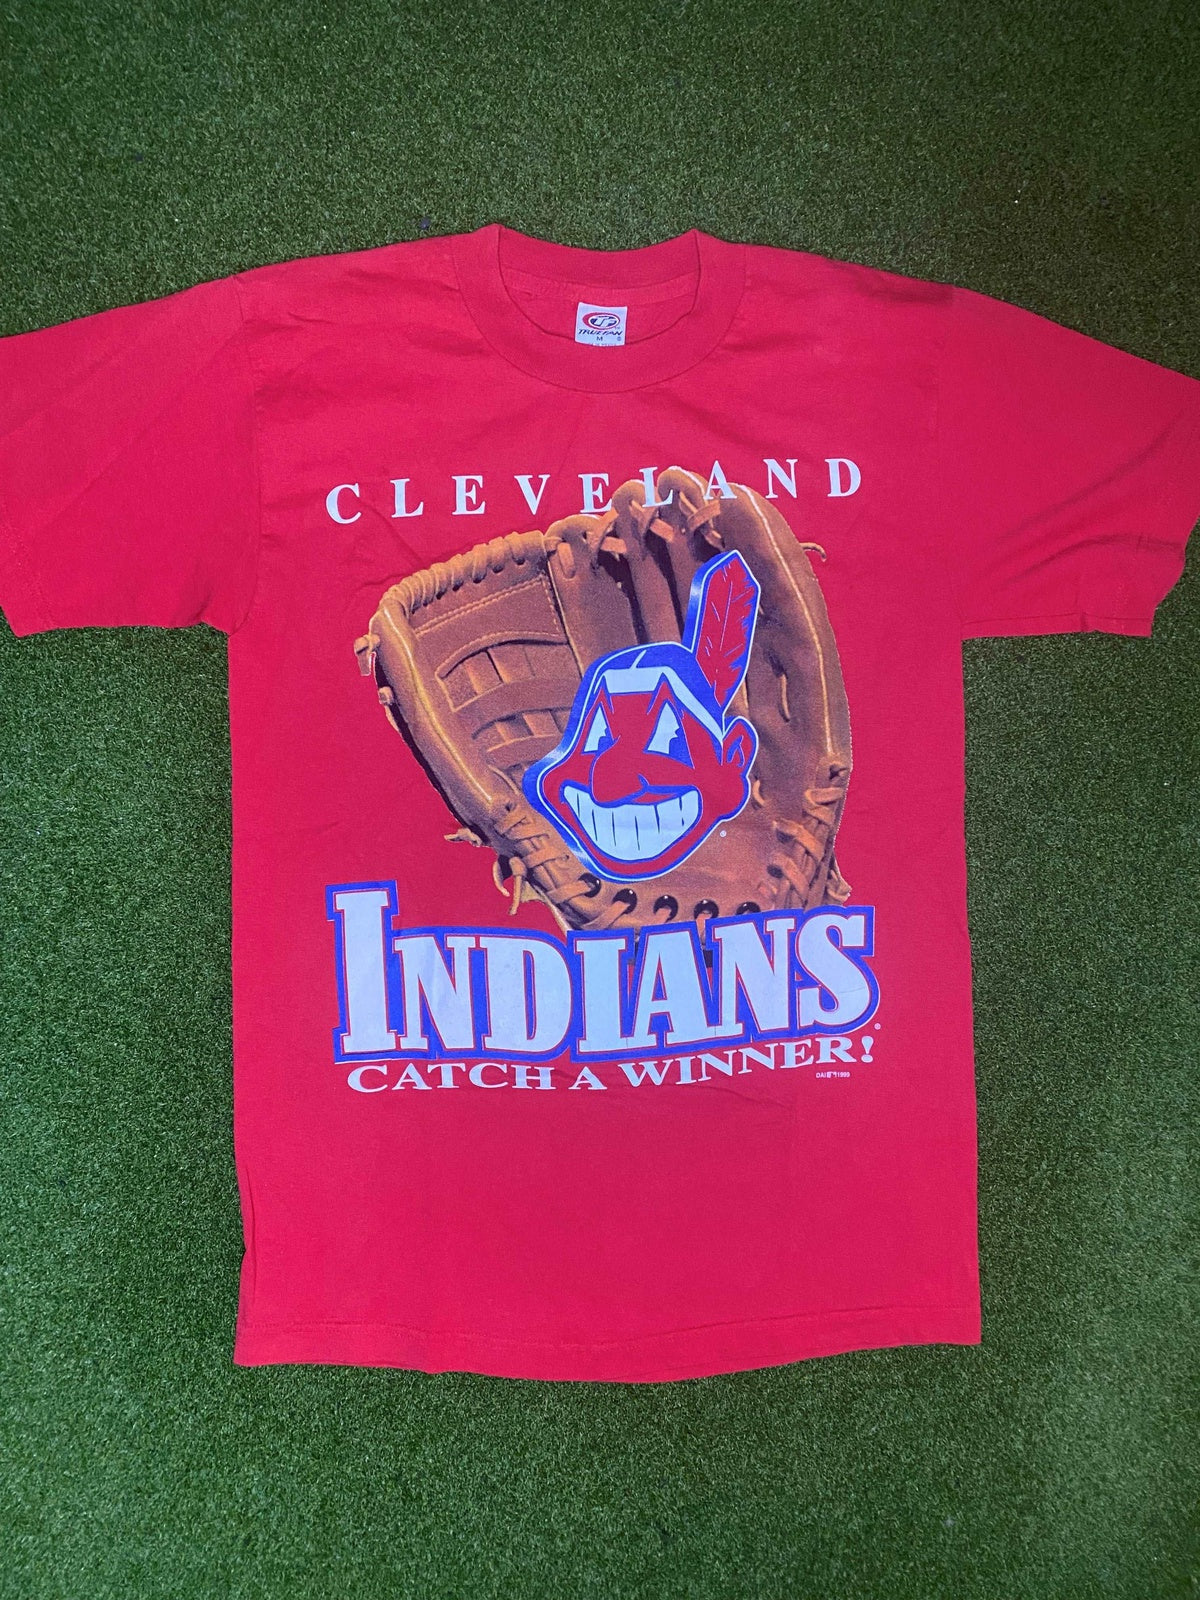 1999 Cleveland Indians - Big Logo - Vintage MLB Tee Shirt (Medium)